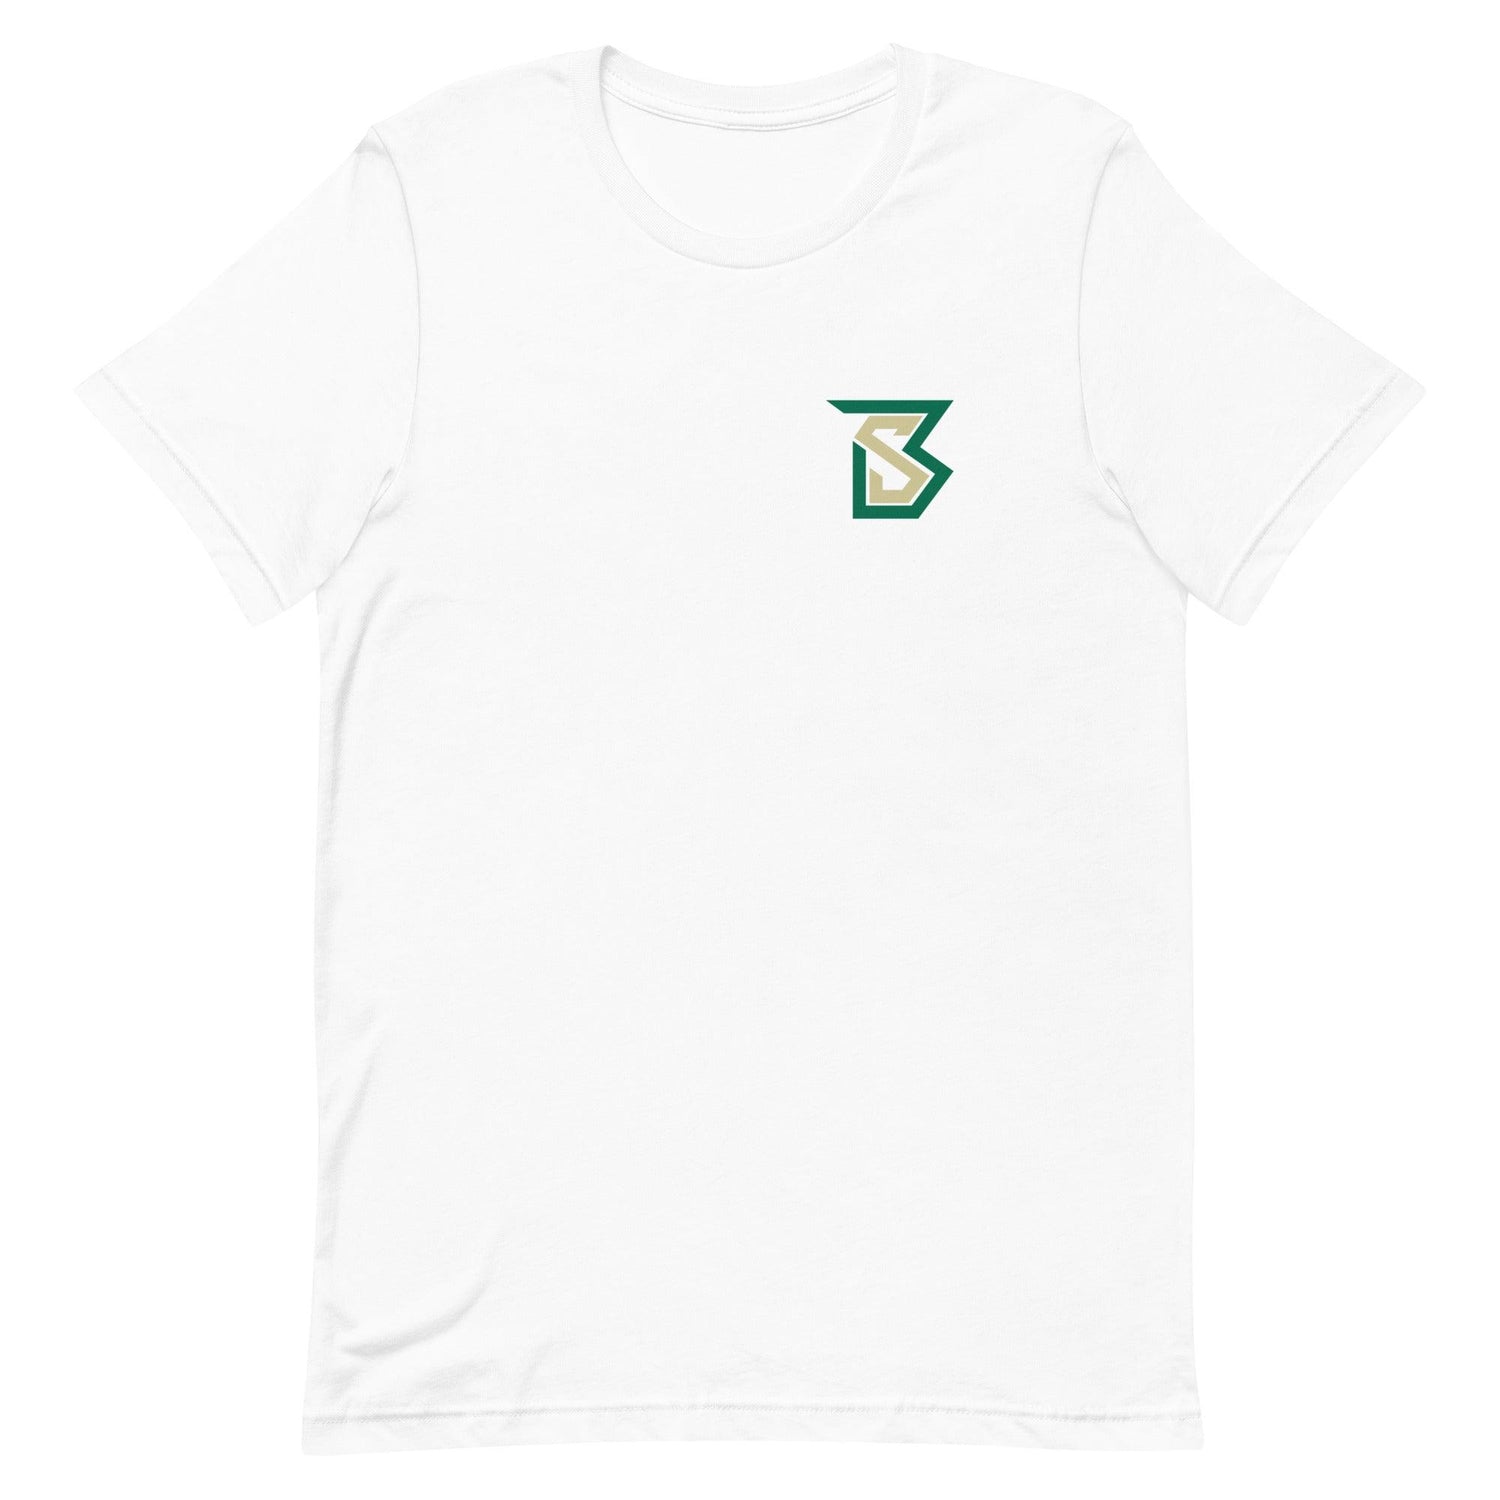 Bentlee Sanders "Essential" t-shirt - Fan Arch